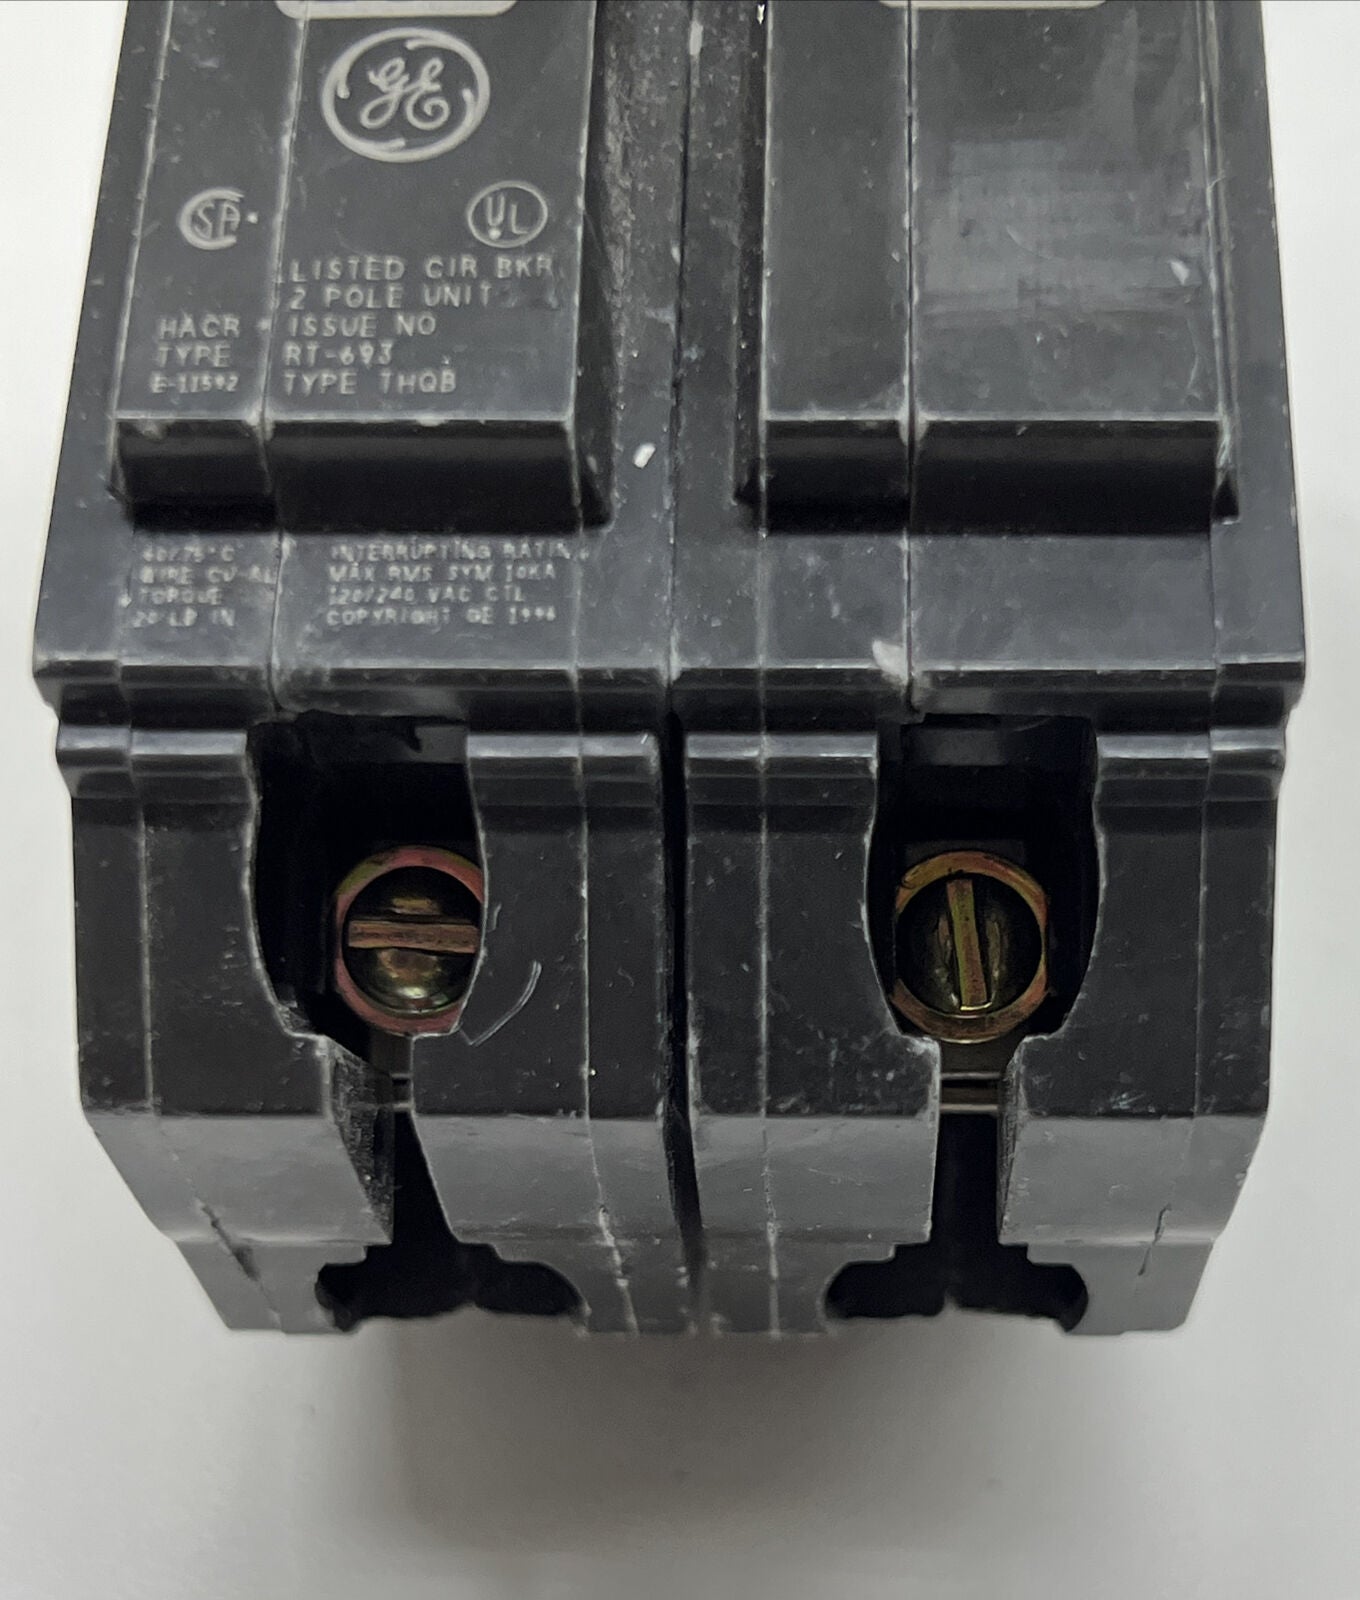 GE GENERAL ELECTRIC E-11592 RT-690 THQB 2-Pole 20A Circuit Breaker (BK106)